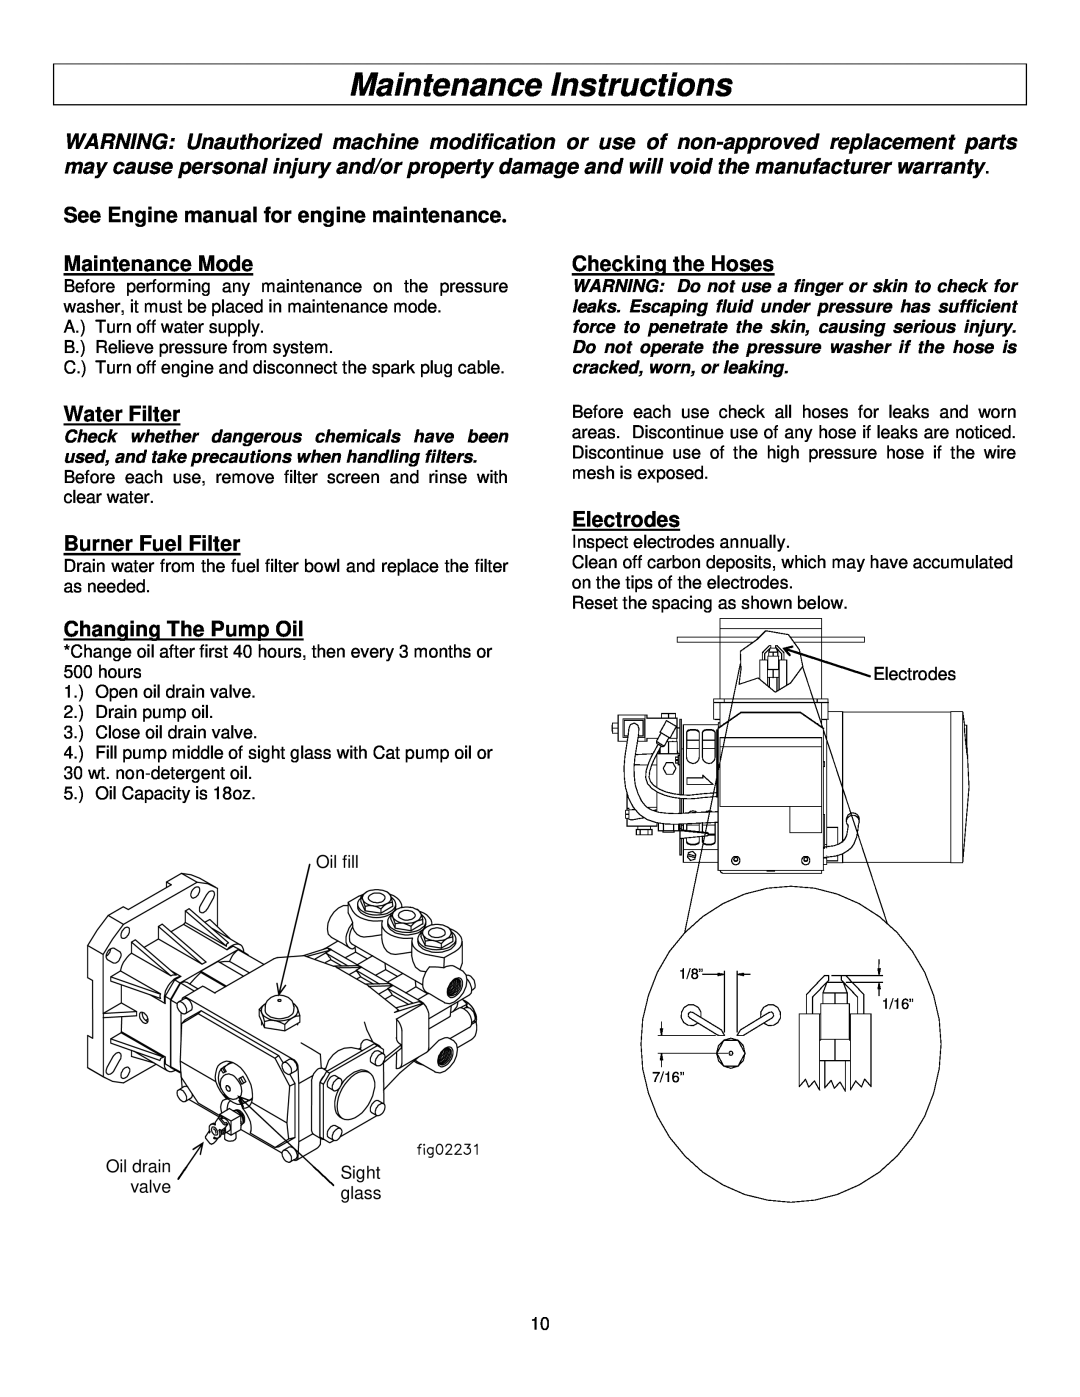 Panasonic M157594J Maintenance Instructions, See Engine manual for engine maintenance Maintenance Mode, Water Filter 